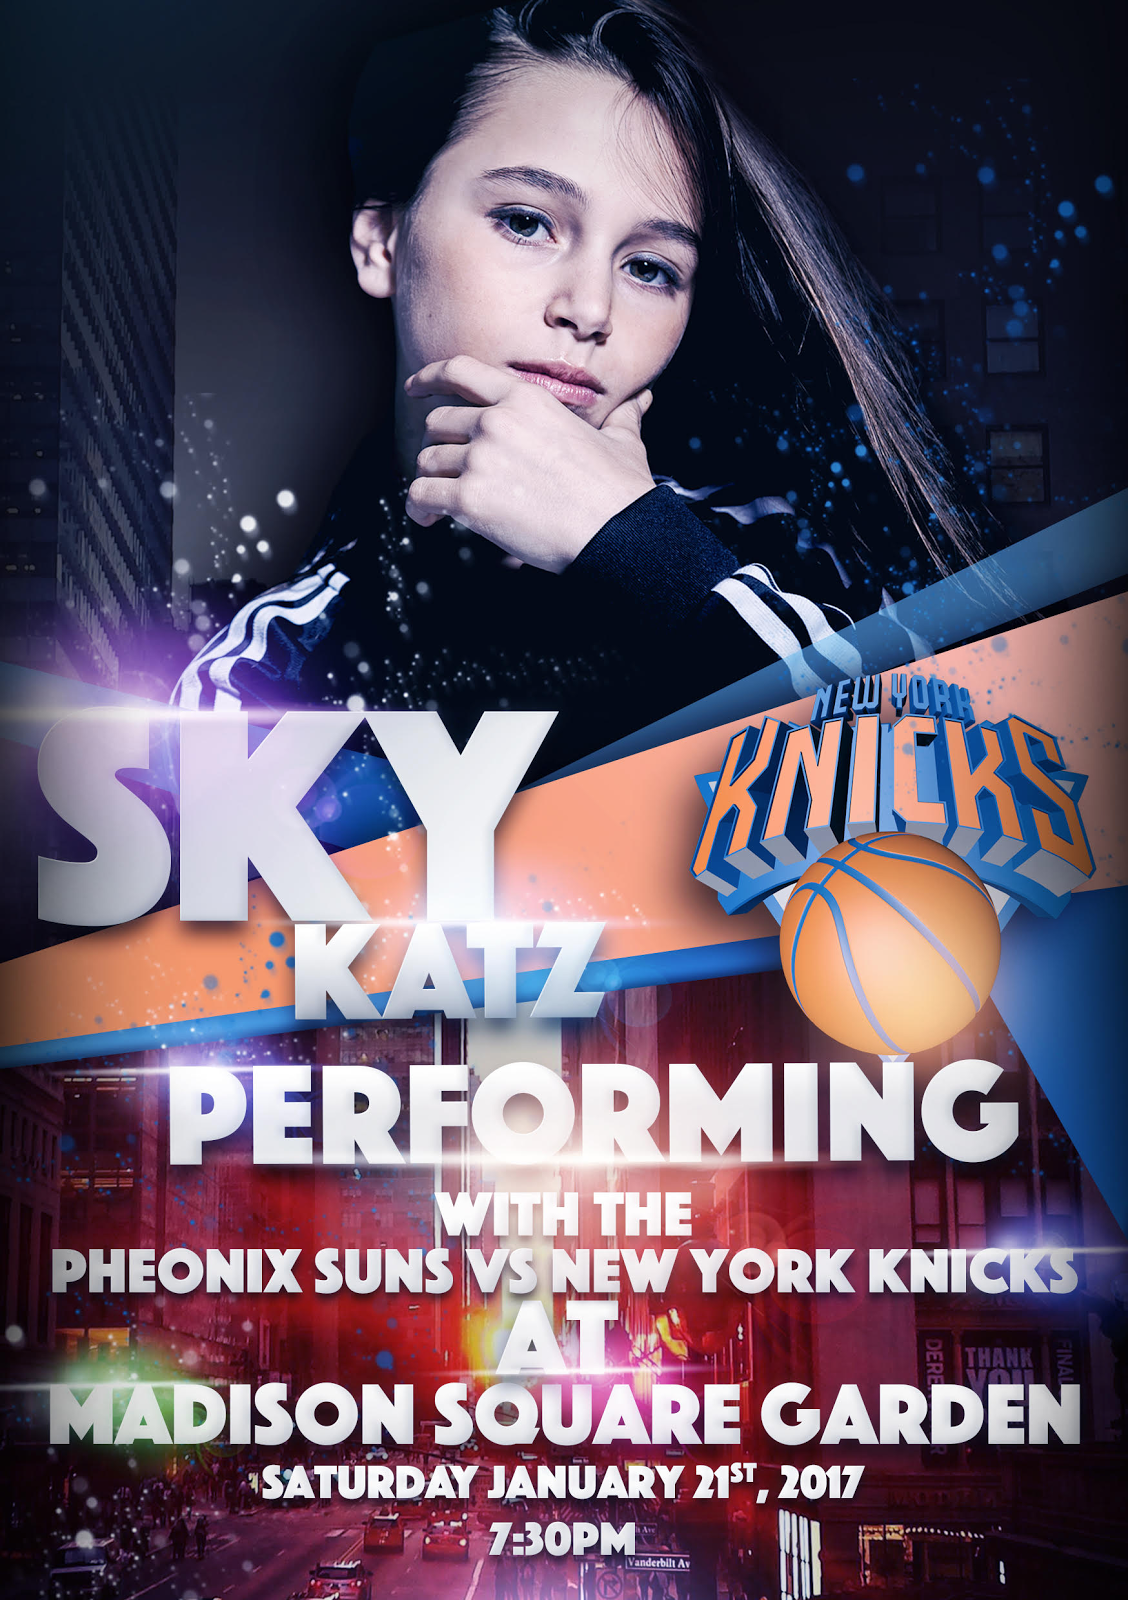 Sky katz to perform live at madison square garden during new york knicks vs phoenix suns saturday january st